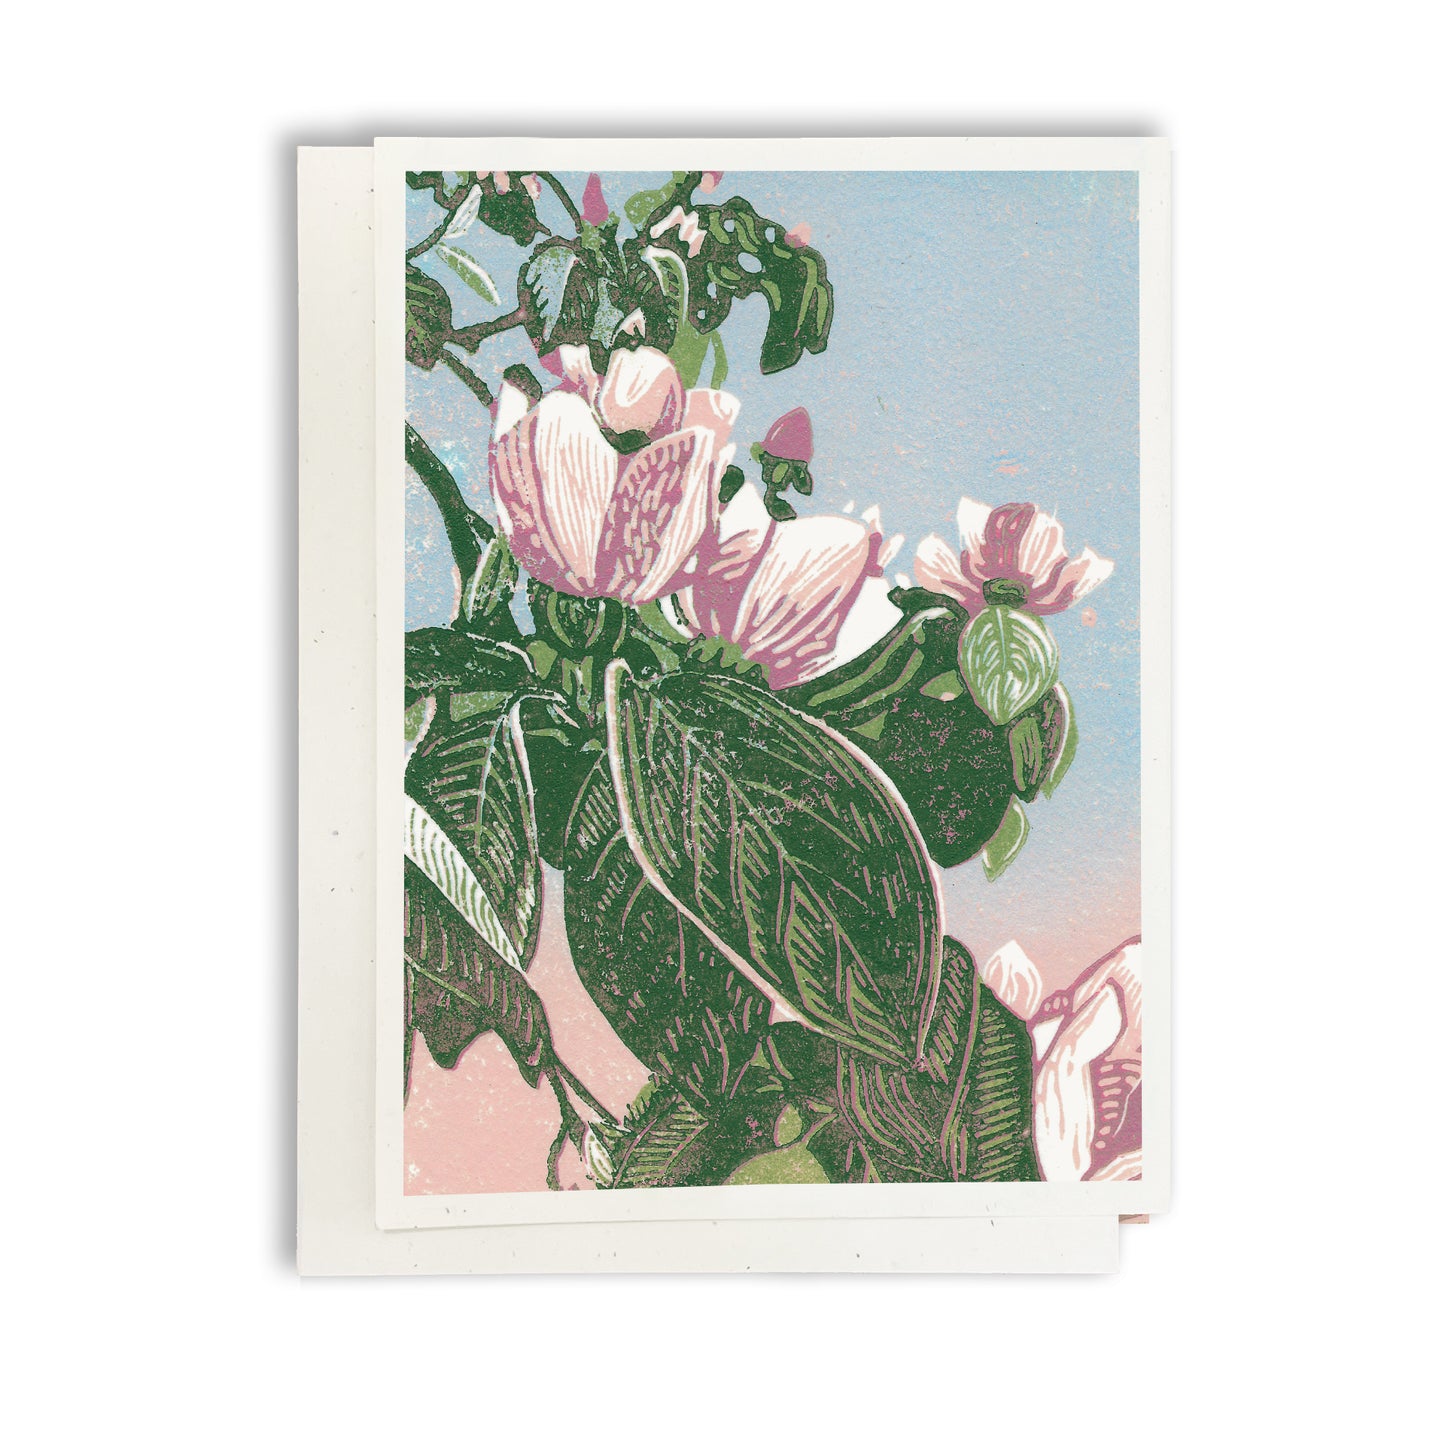 A casually elegant card featuring a digital reproductions of Natalia Wohletz's block print design titled En el Jardin.